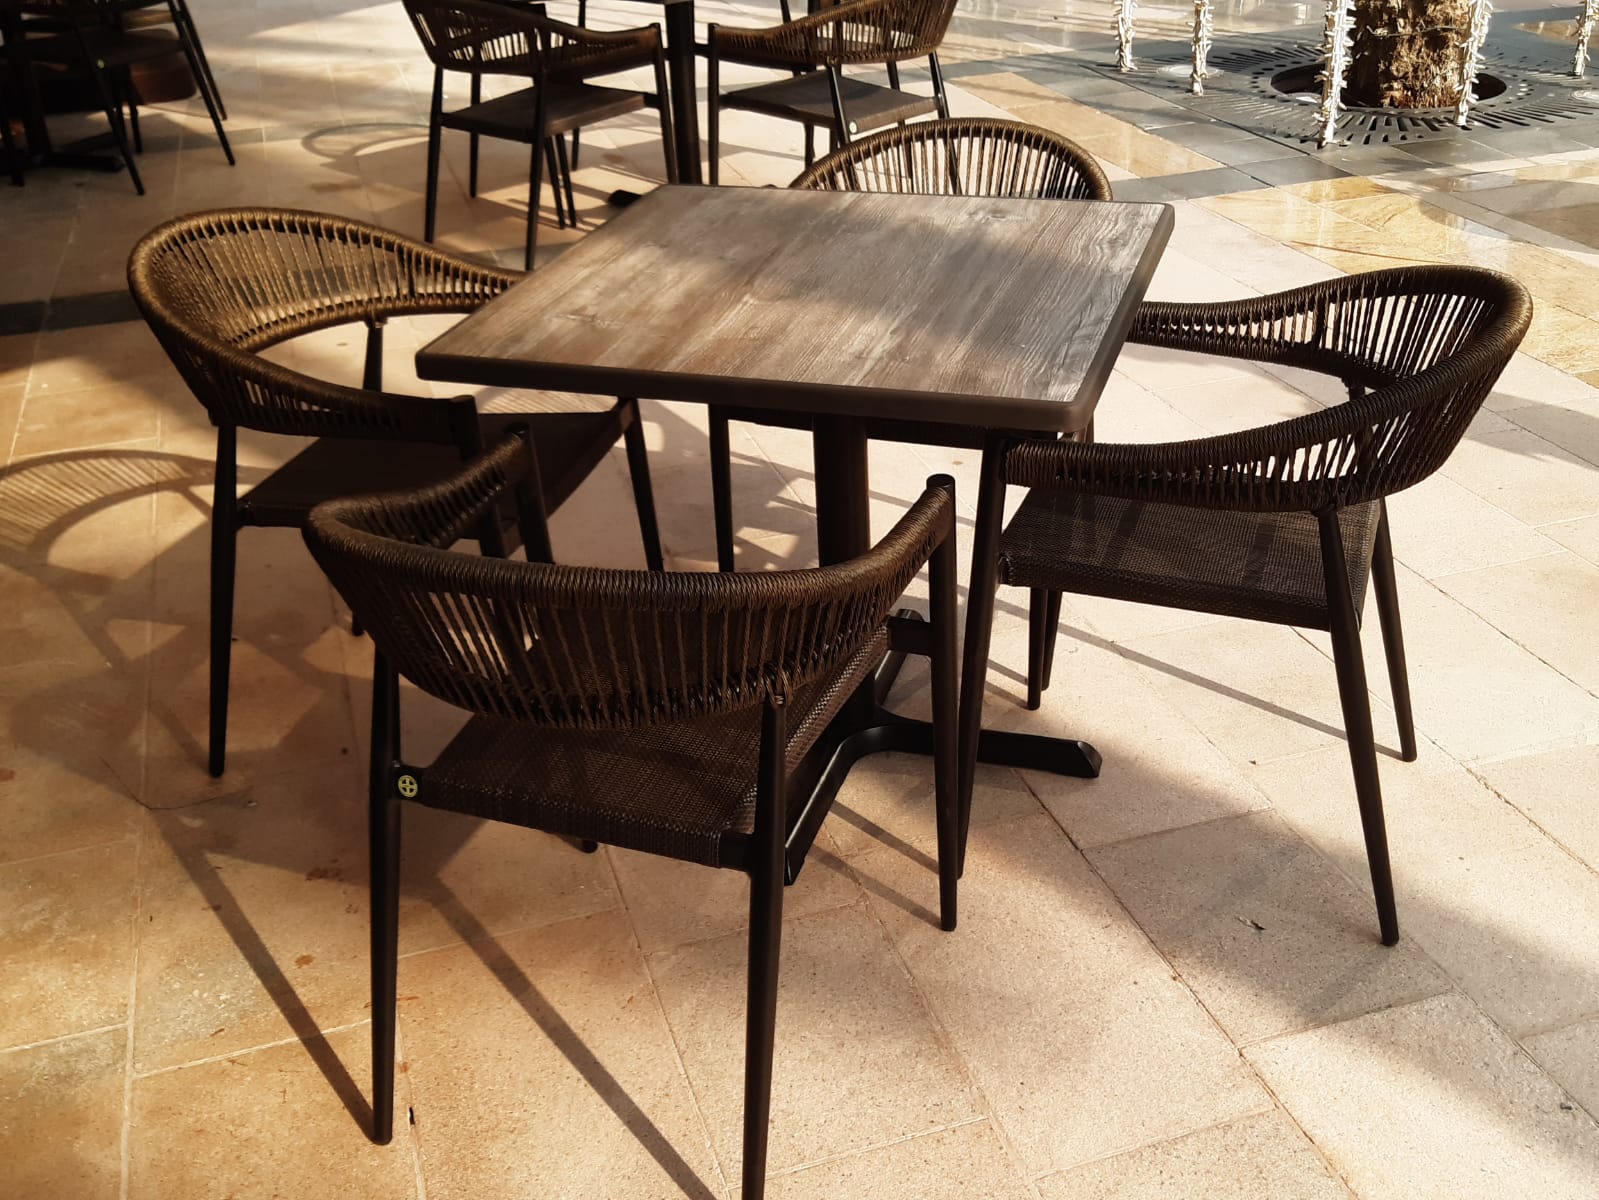 Horeca contract furniture Dubai